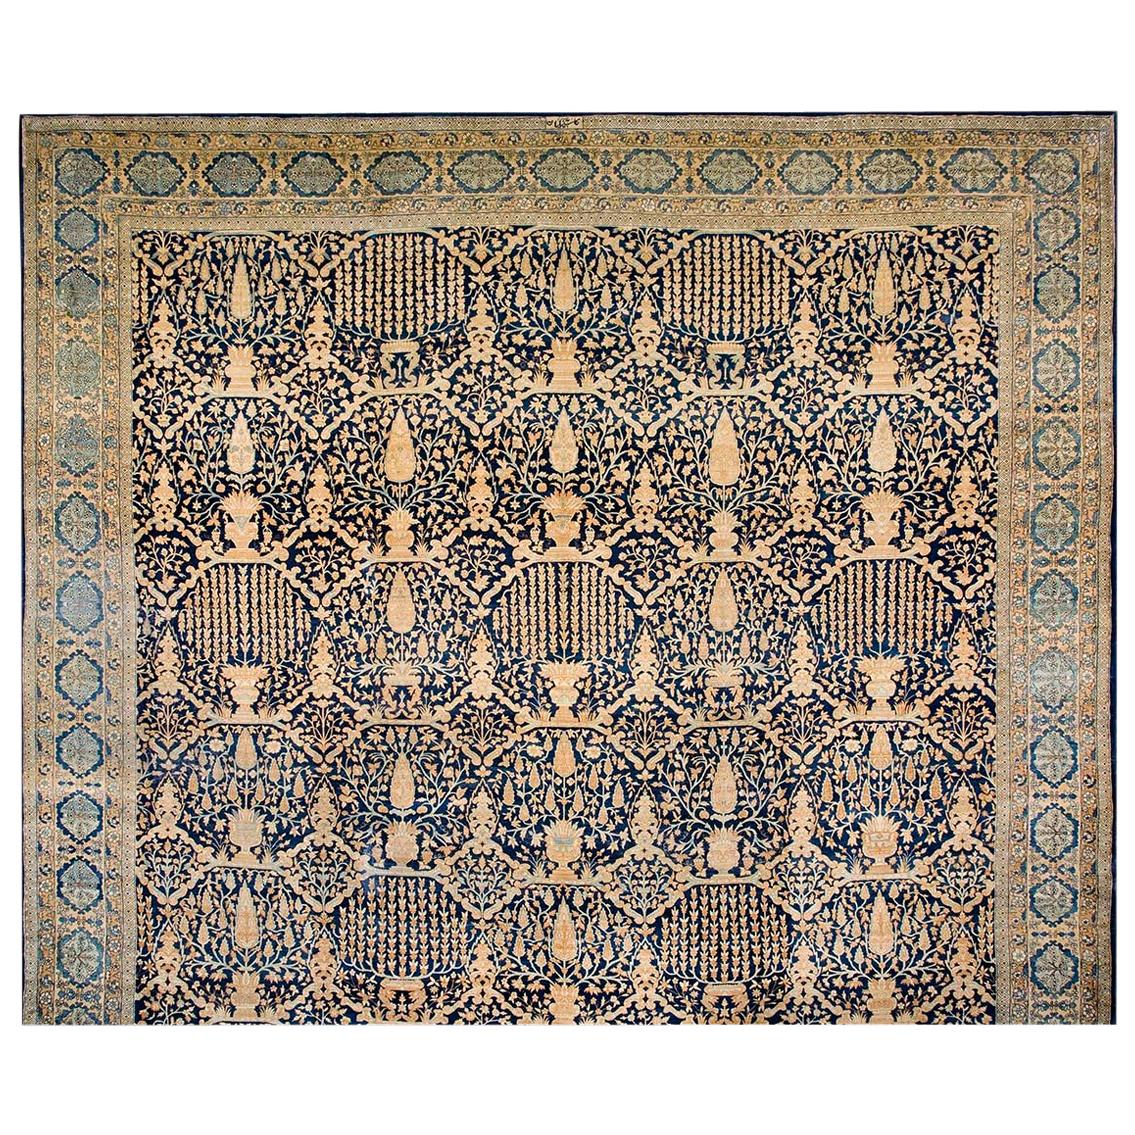 Early 20th Century Persian Kerman Lavar Carpet by OCM ( 16'4"x 30' - 498 x 915 ) For Sale